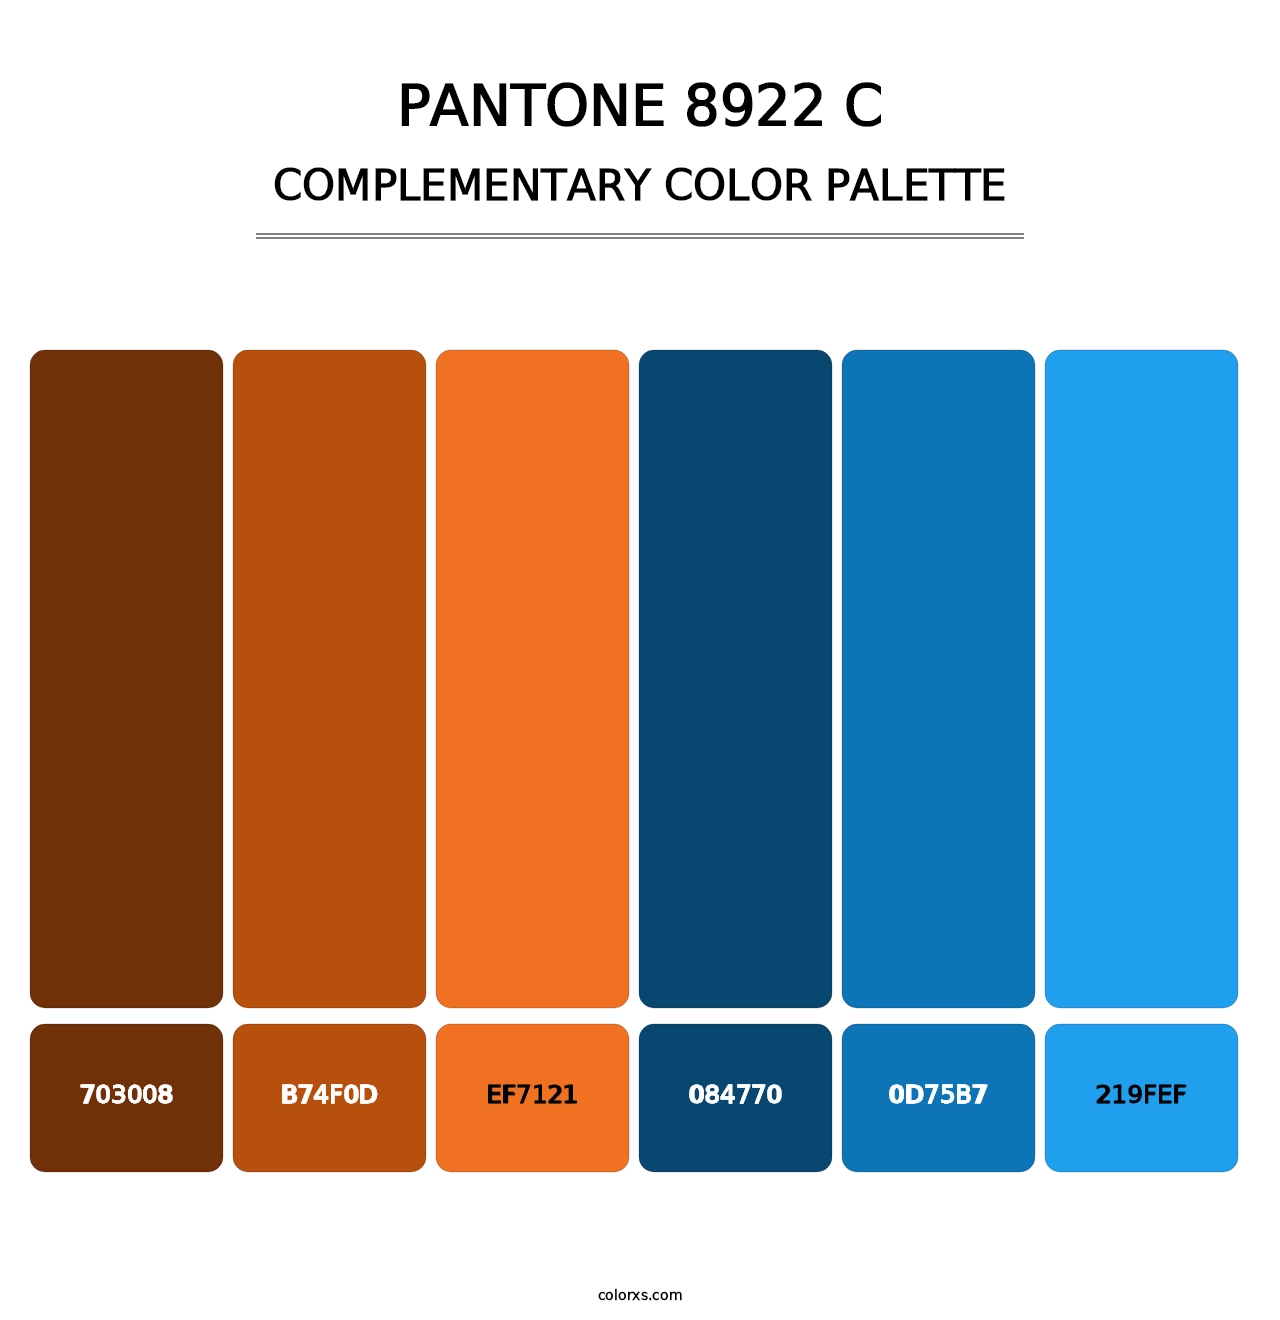 PANTONE 8922 C - Complementary Color Palette